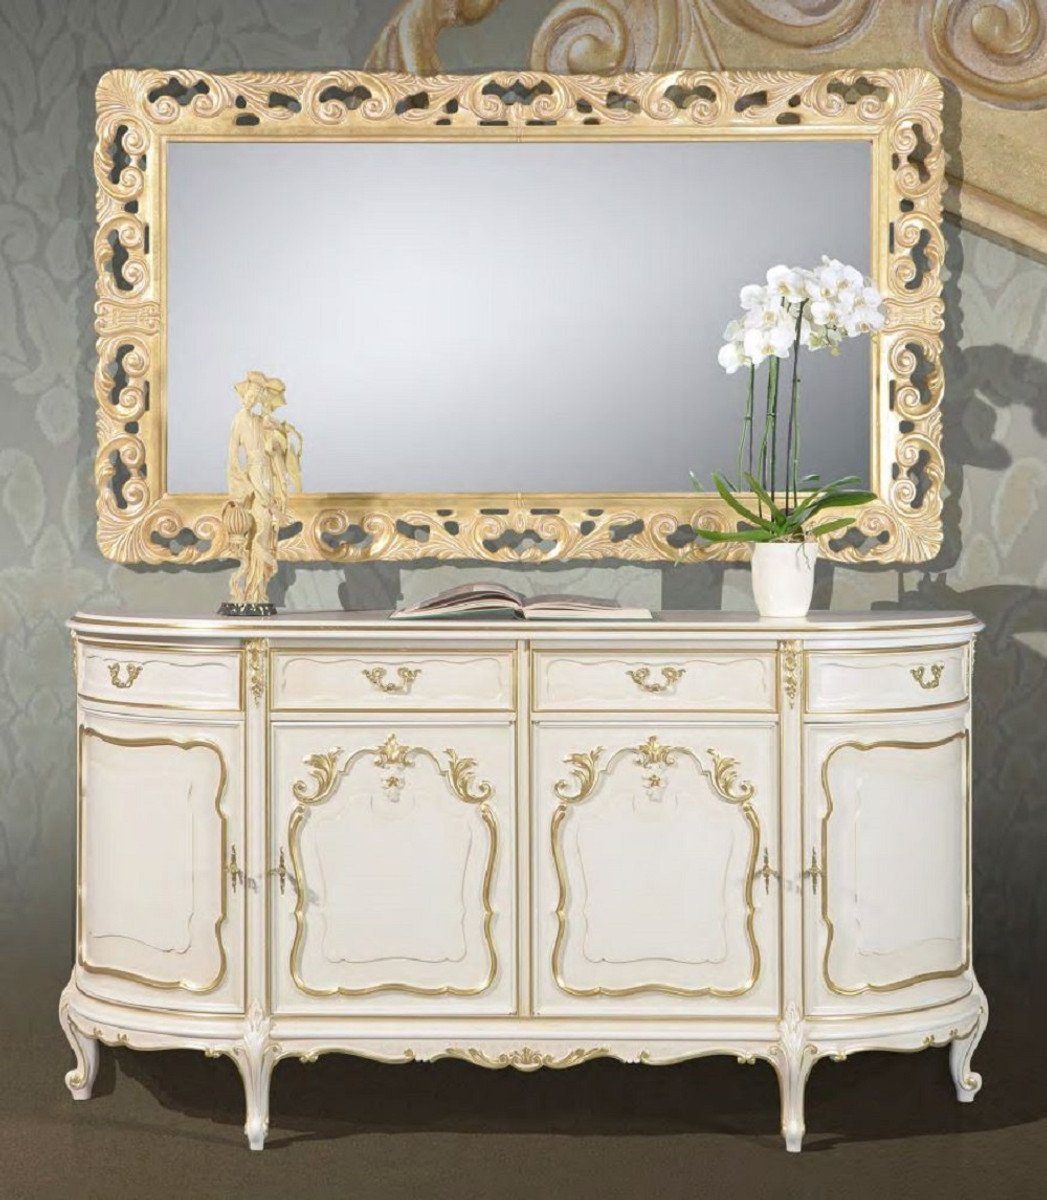 Spiegel Massivholz Italy - - Barockspiegel Rechteckiger Luxus Gold Möbel Barock - Padrino Prunkvolle Qualität - Barockstil Wandspiegel Made im Barock Luxus in Casa